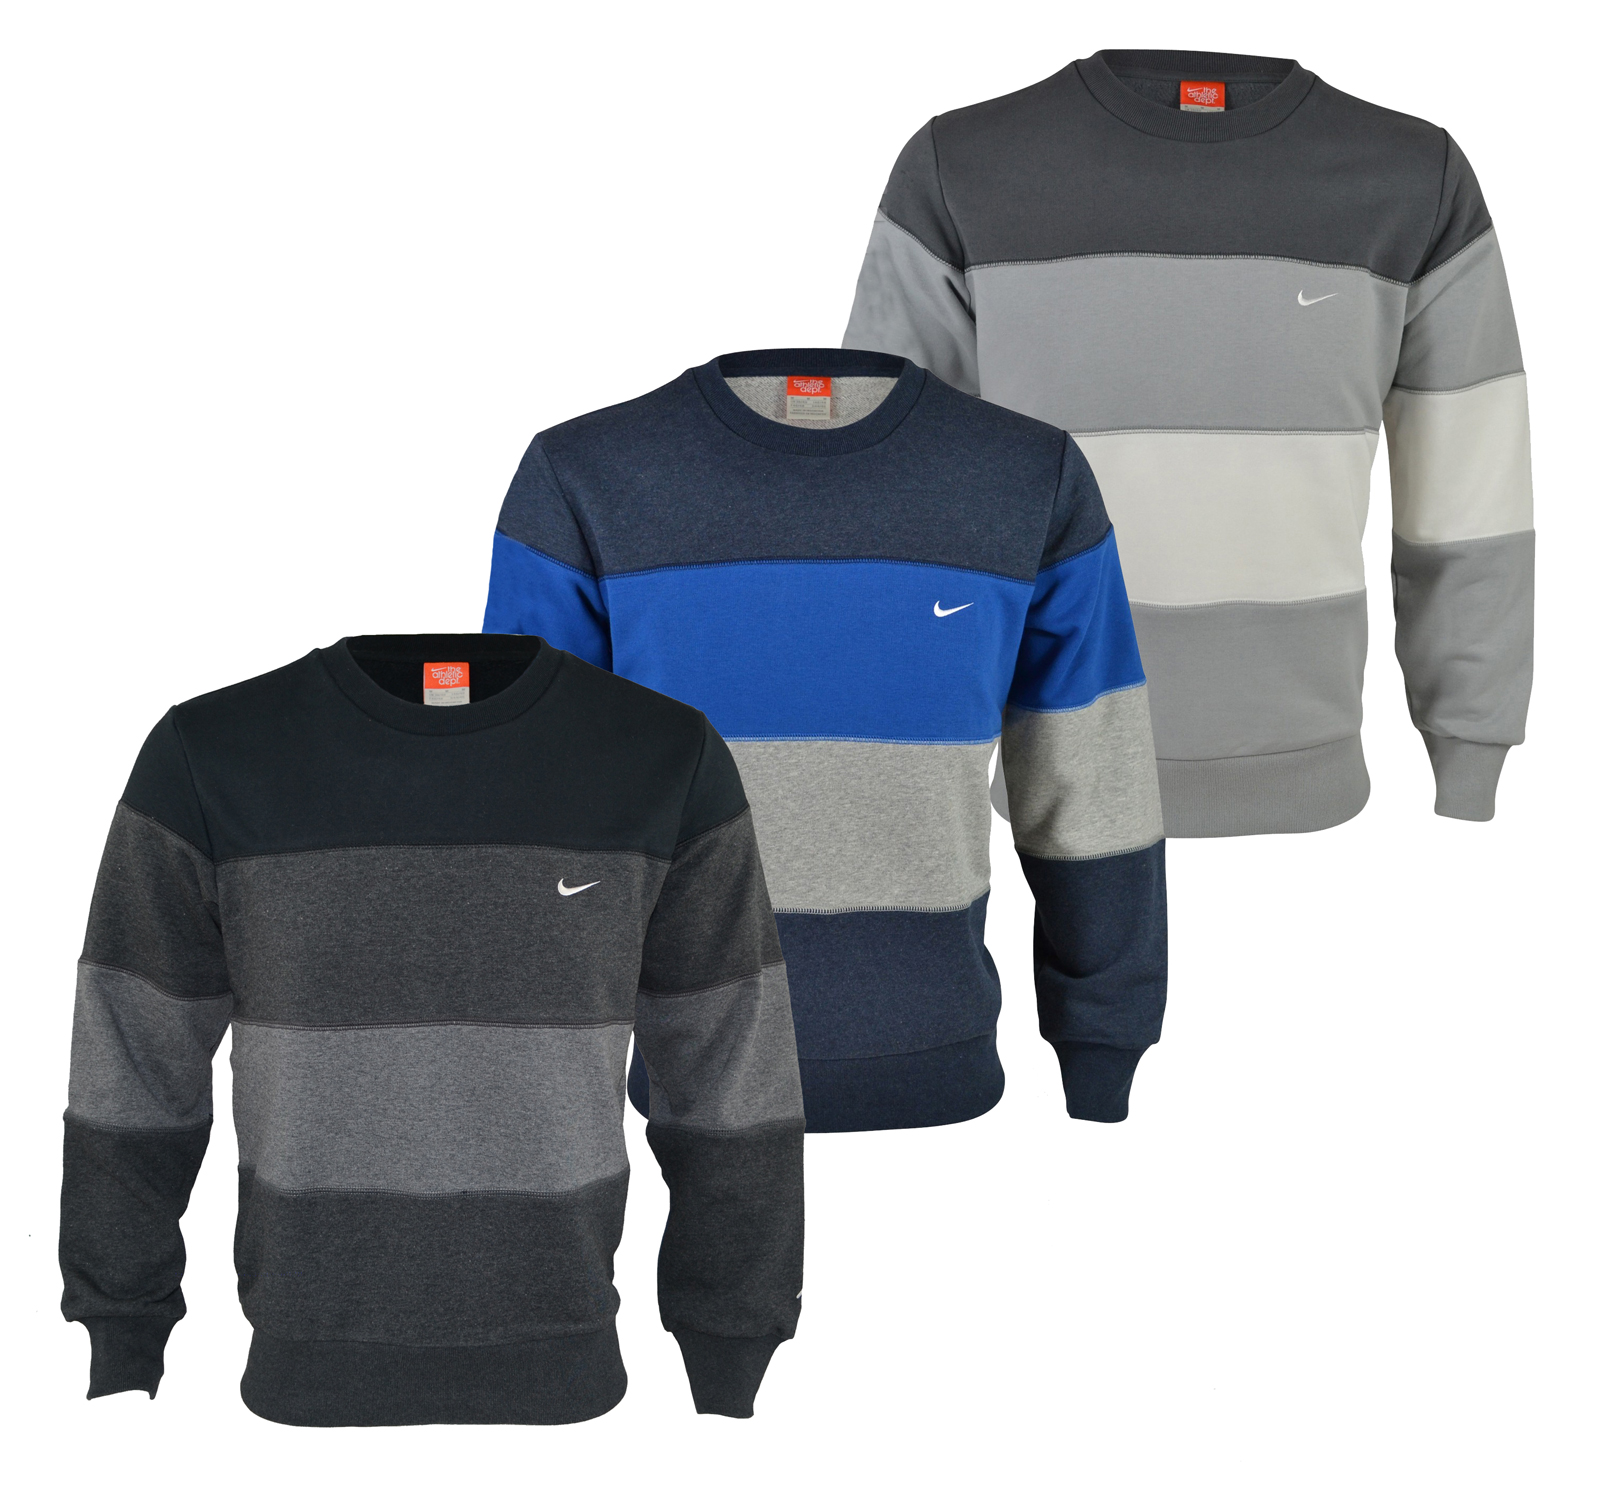 New Nike Mens Fleece Lined Triband Striped Sweatshirt Jumper Black Blue ...